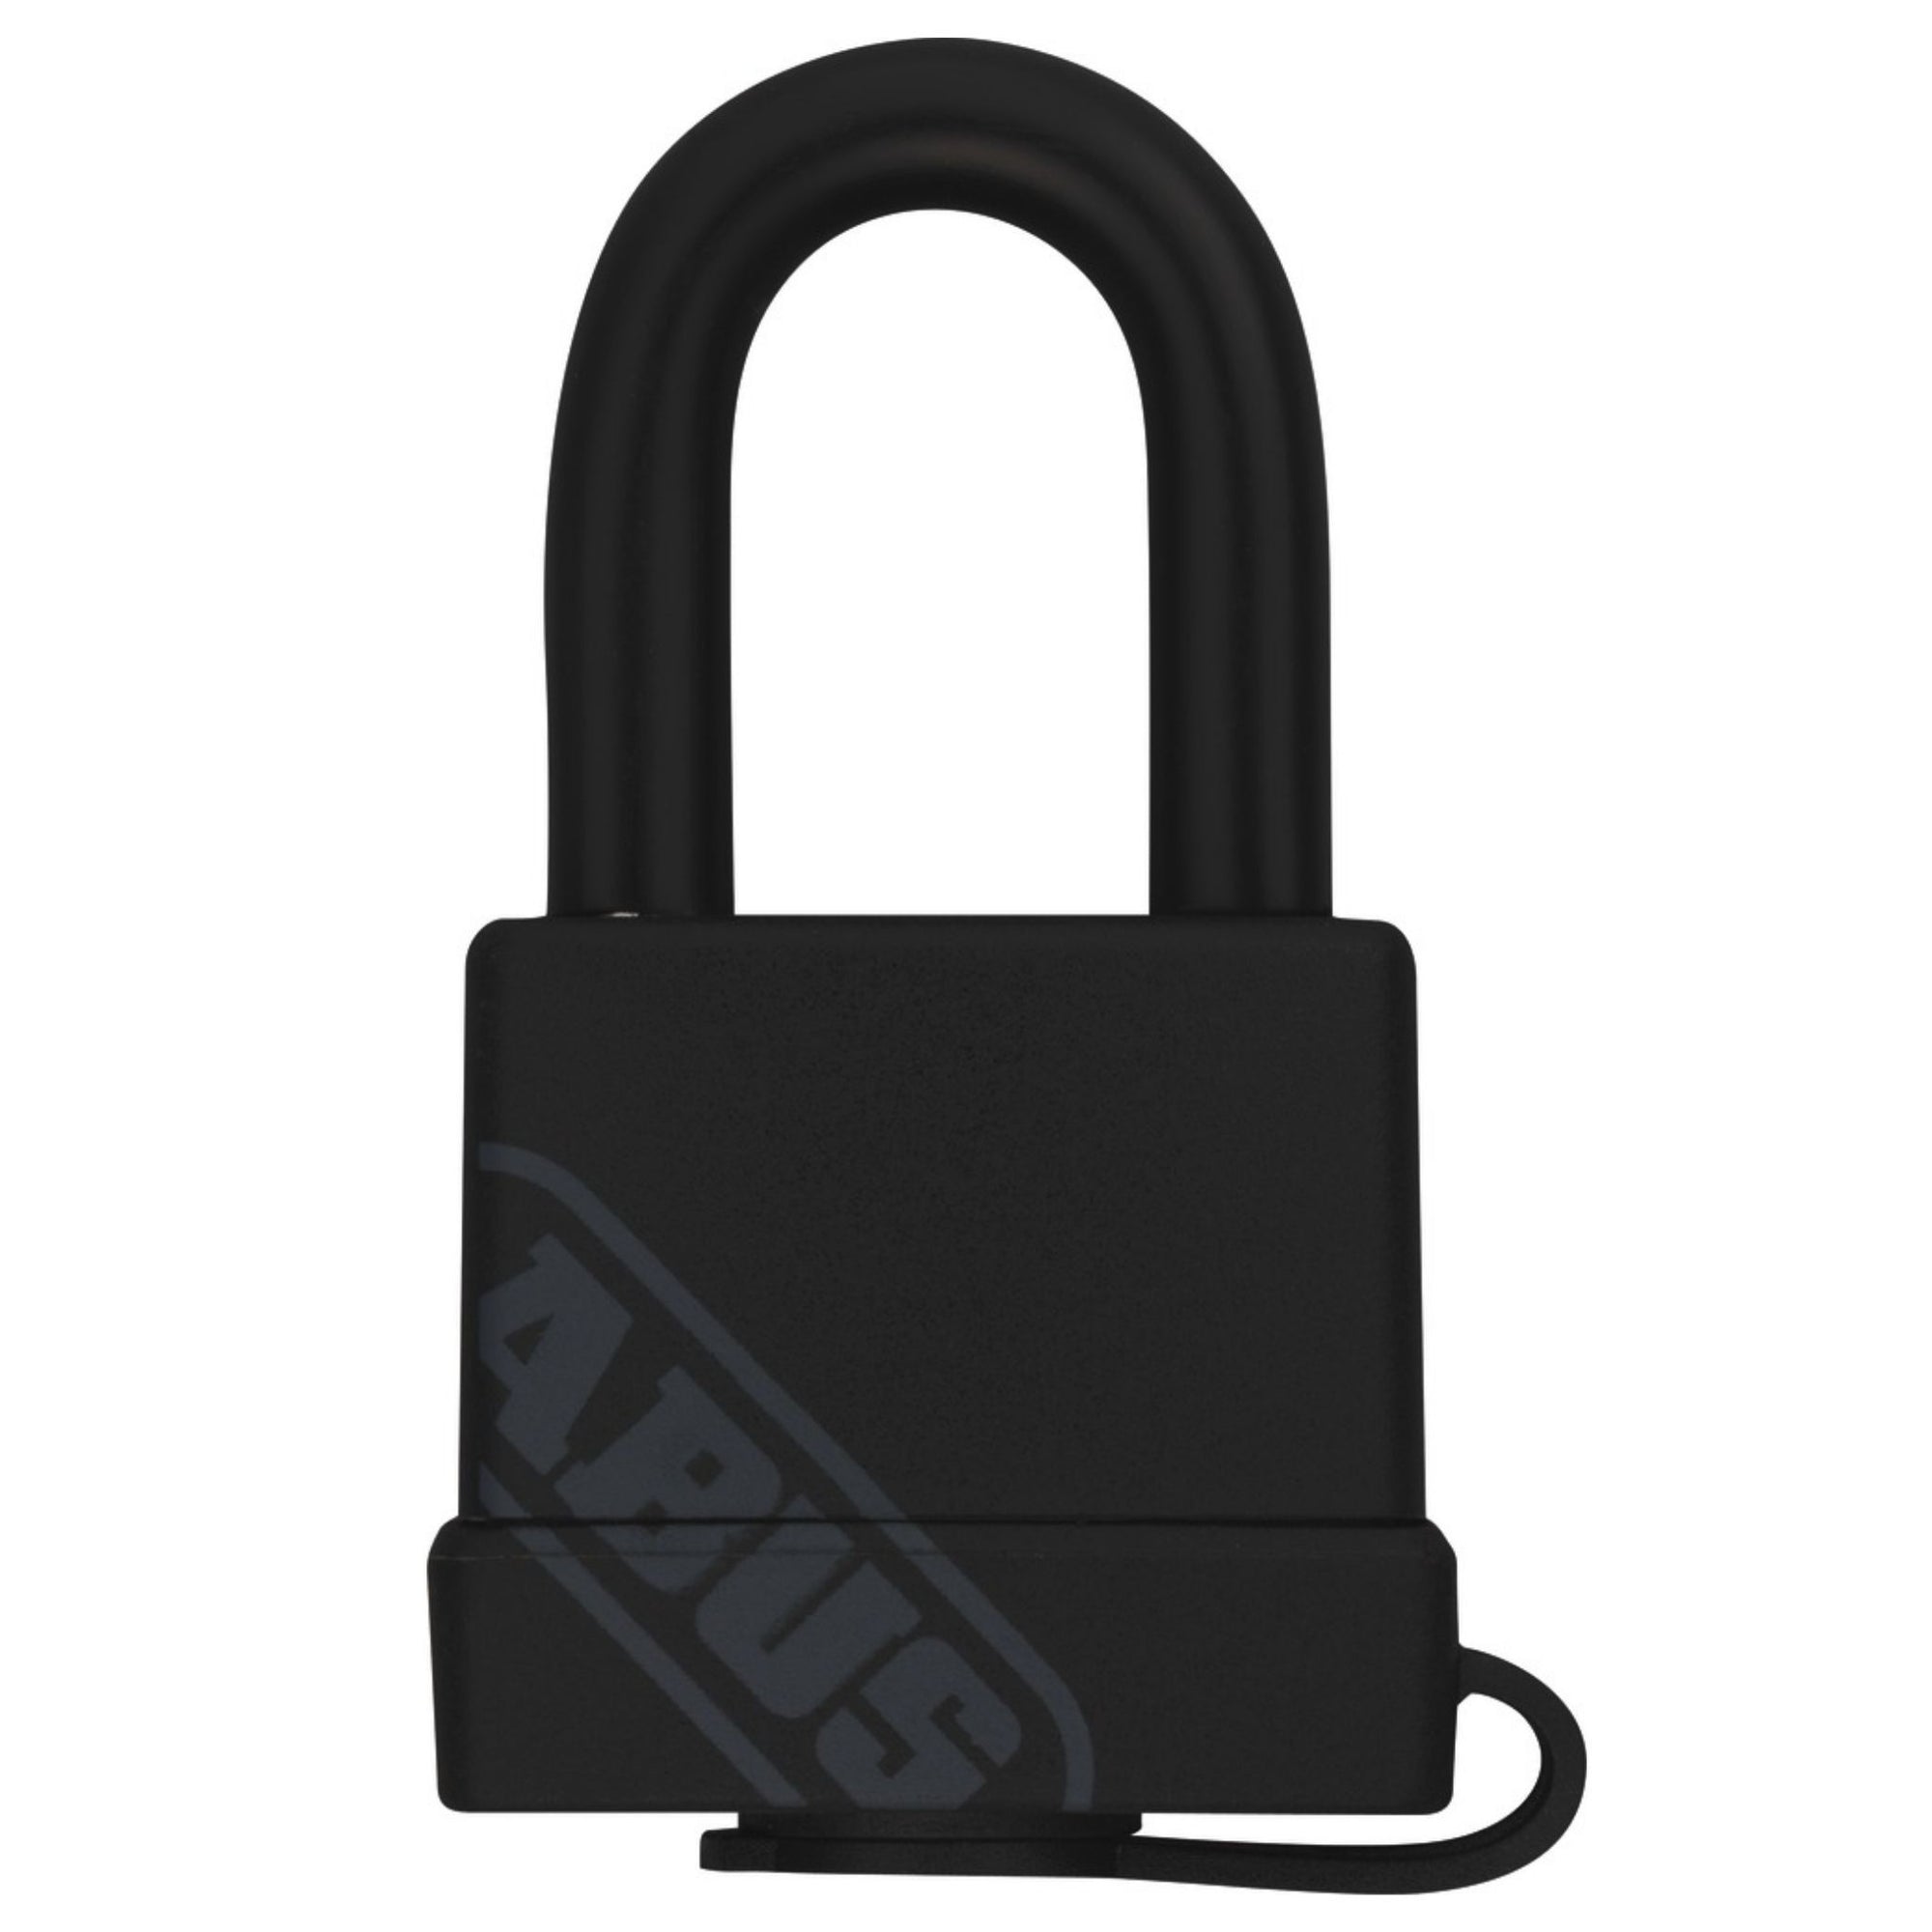 Abus 70/35 KA 6301 Lock Weatherproof Brass Padlock Keyed Alike to Match Existing Key Number KA6301 - The Lock Source